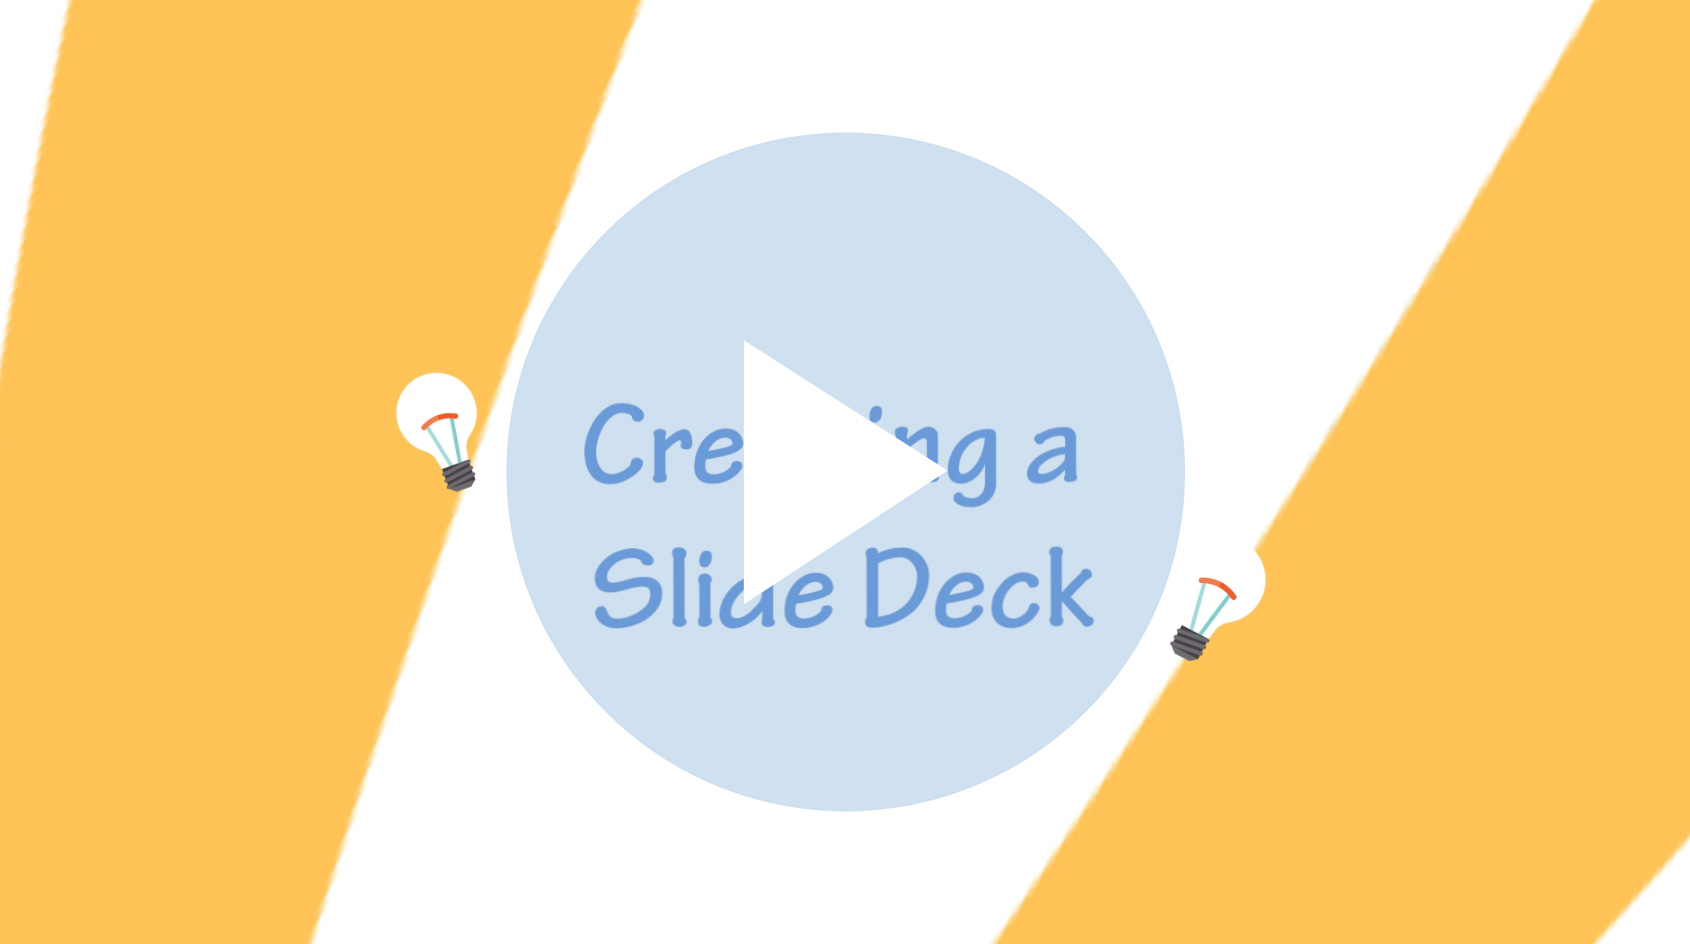 Creating a Slide Deck